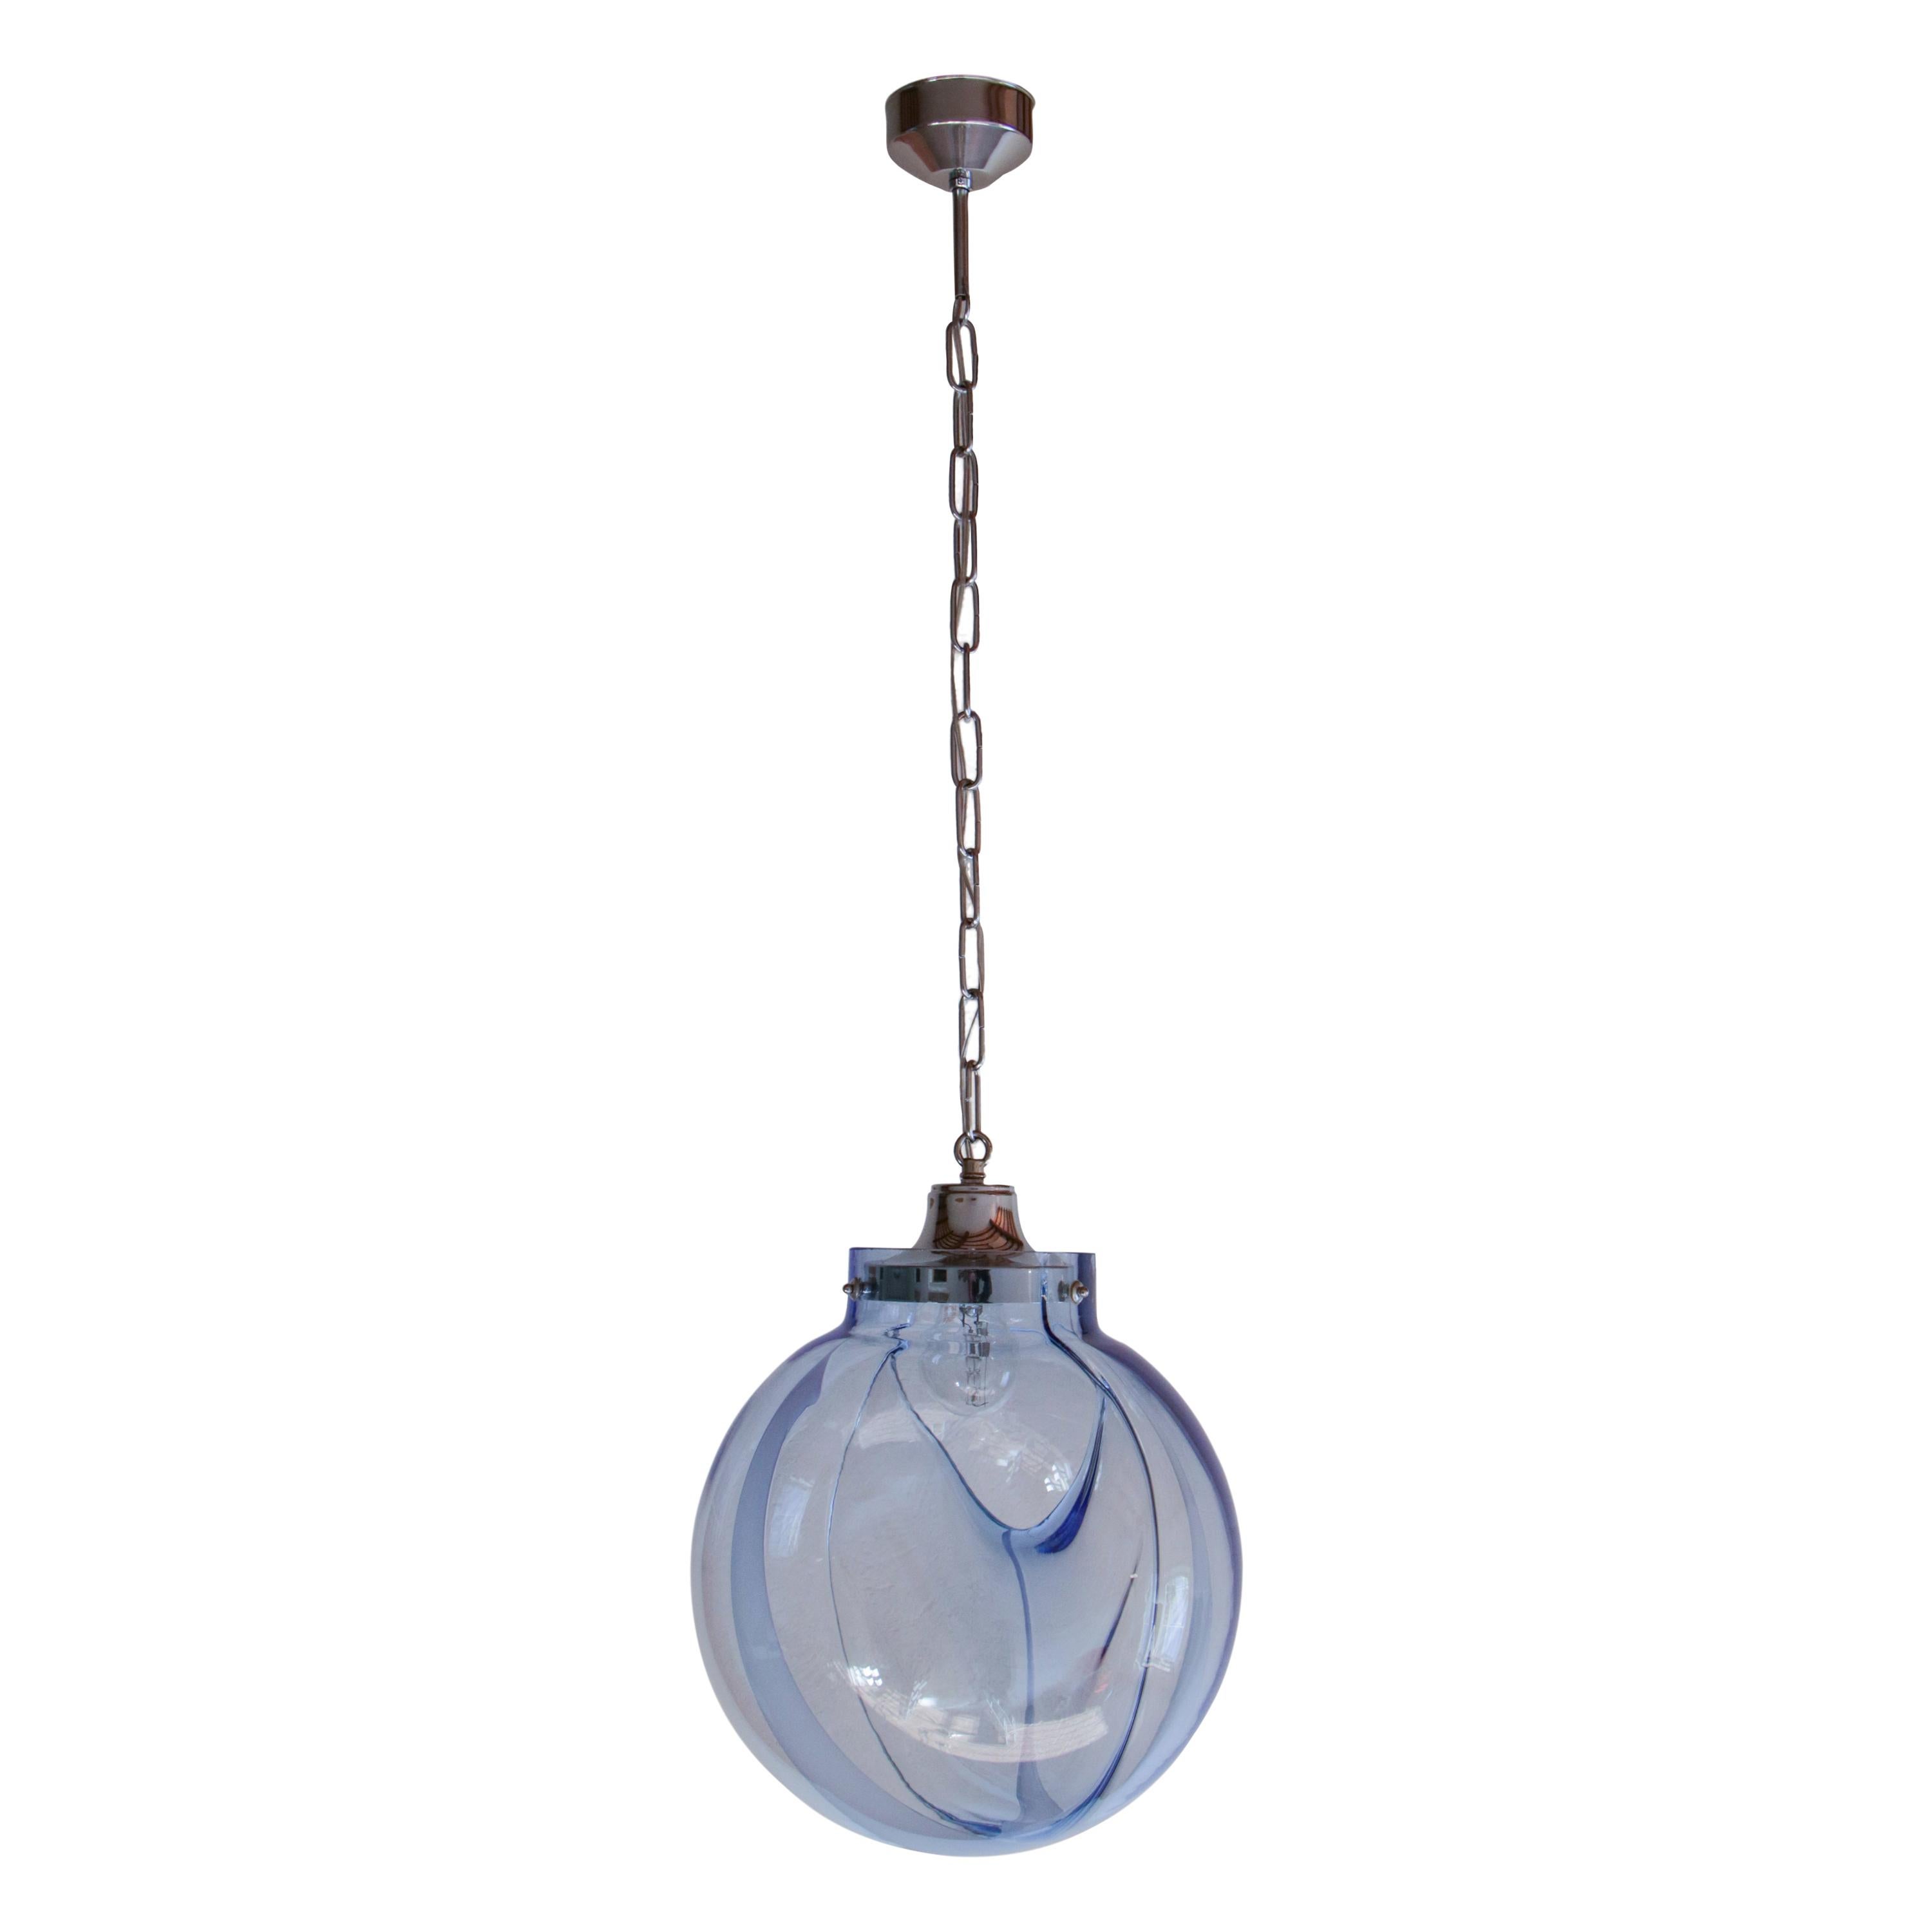 Stylish Italian mid-century blown Murano glass, ball shape pendant lamp designed by Toni Zuccheri in the 1960s per Venini fashion house and named this piece 